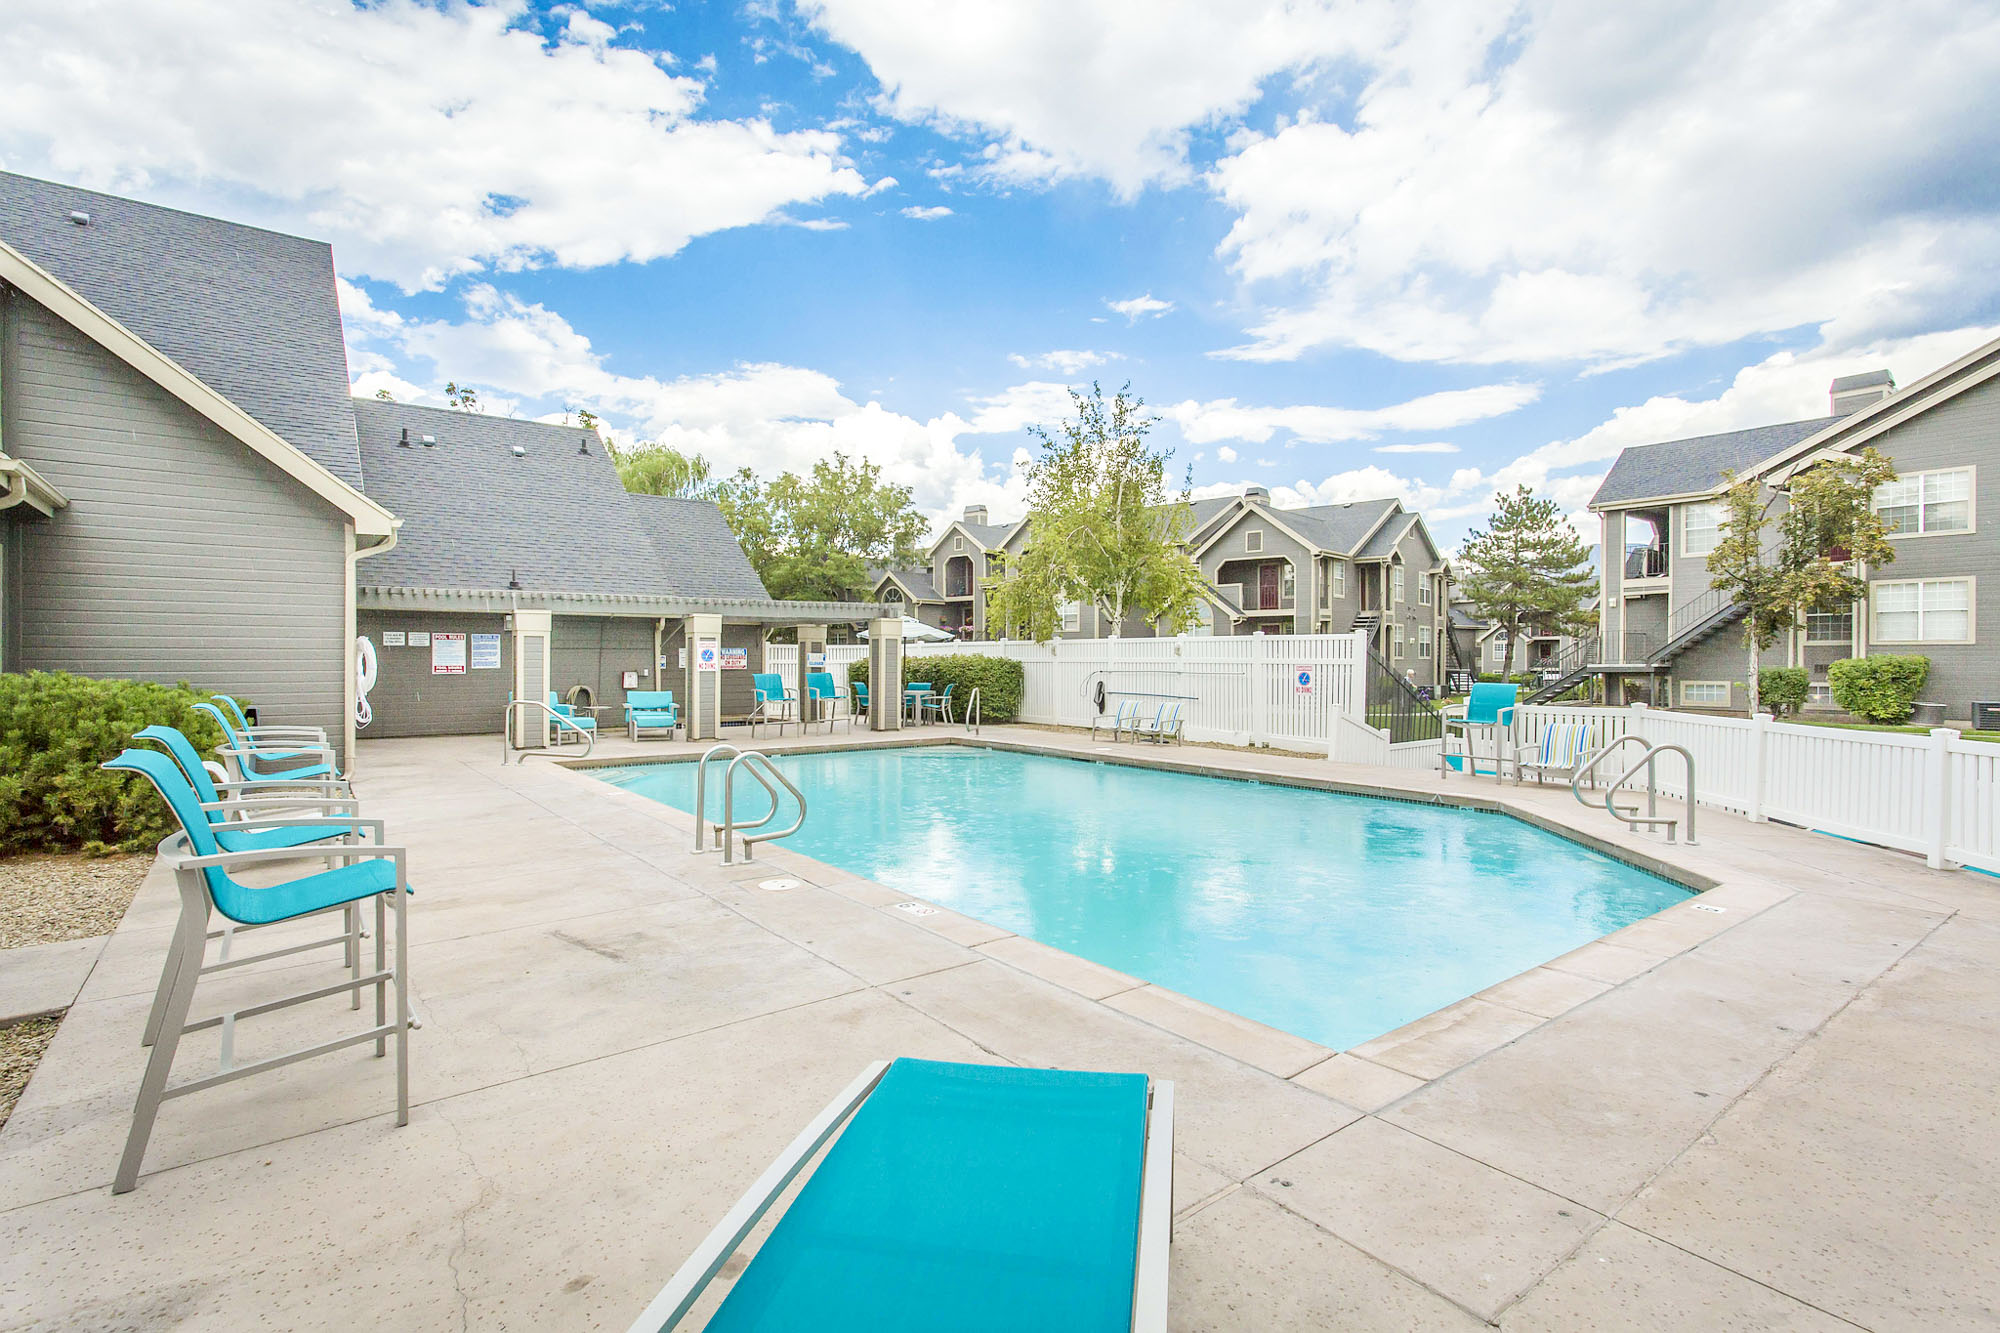 The pool at Stillwater apartments in Murray, Utah.